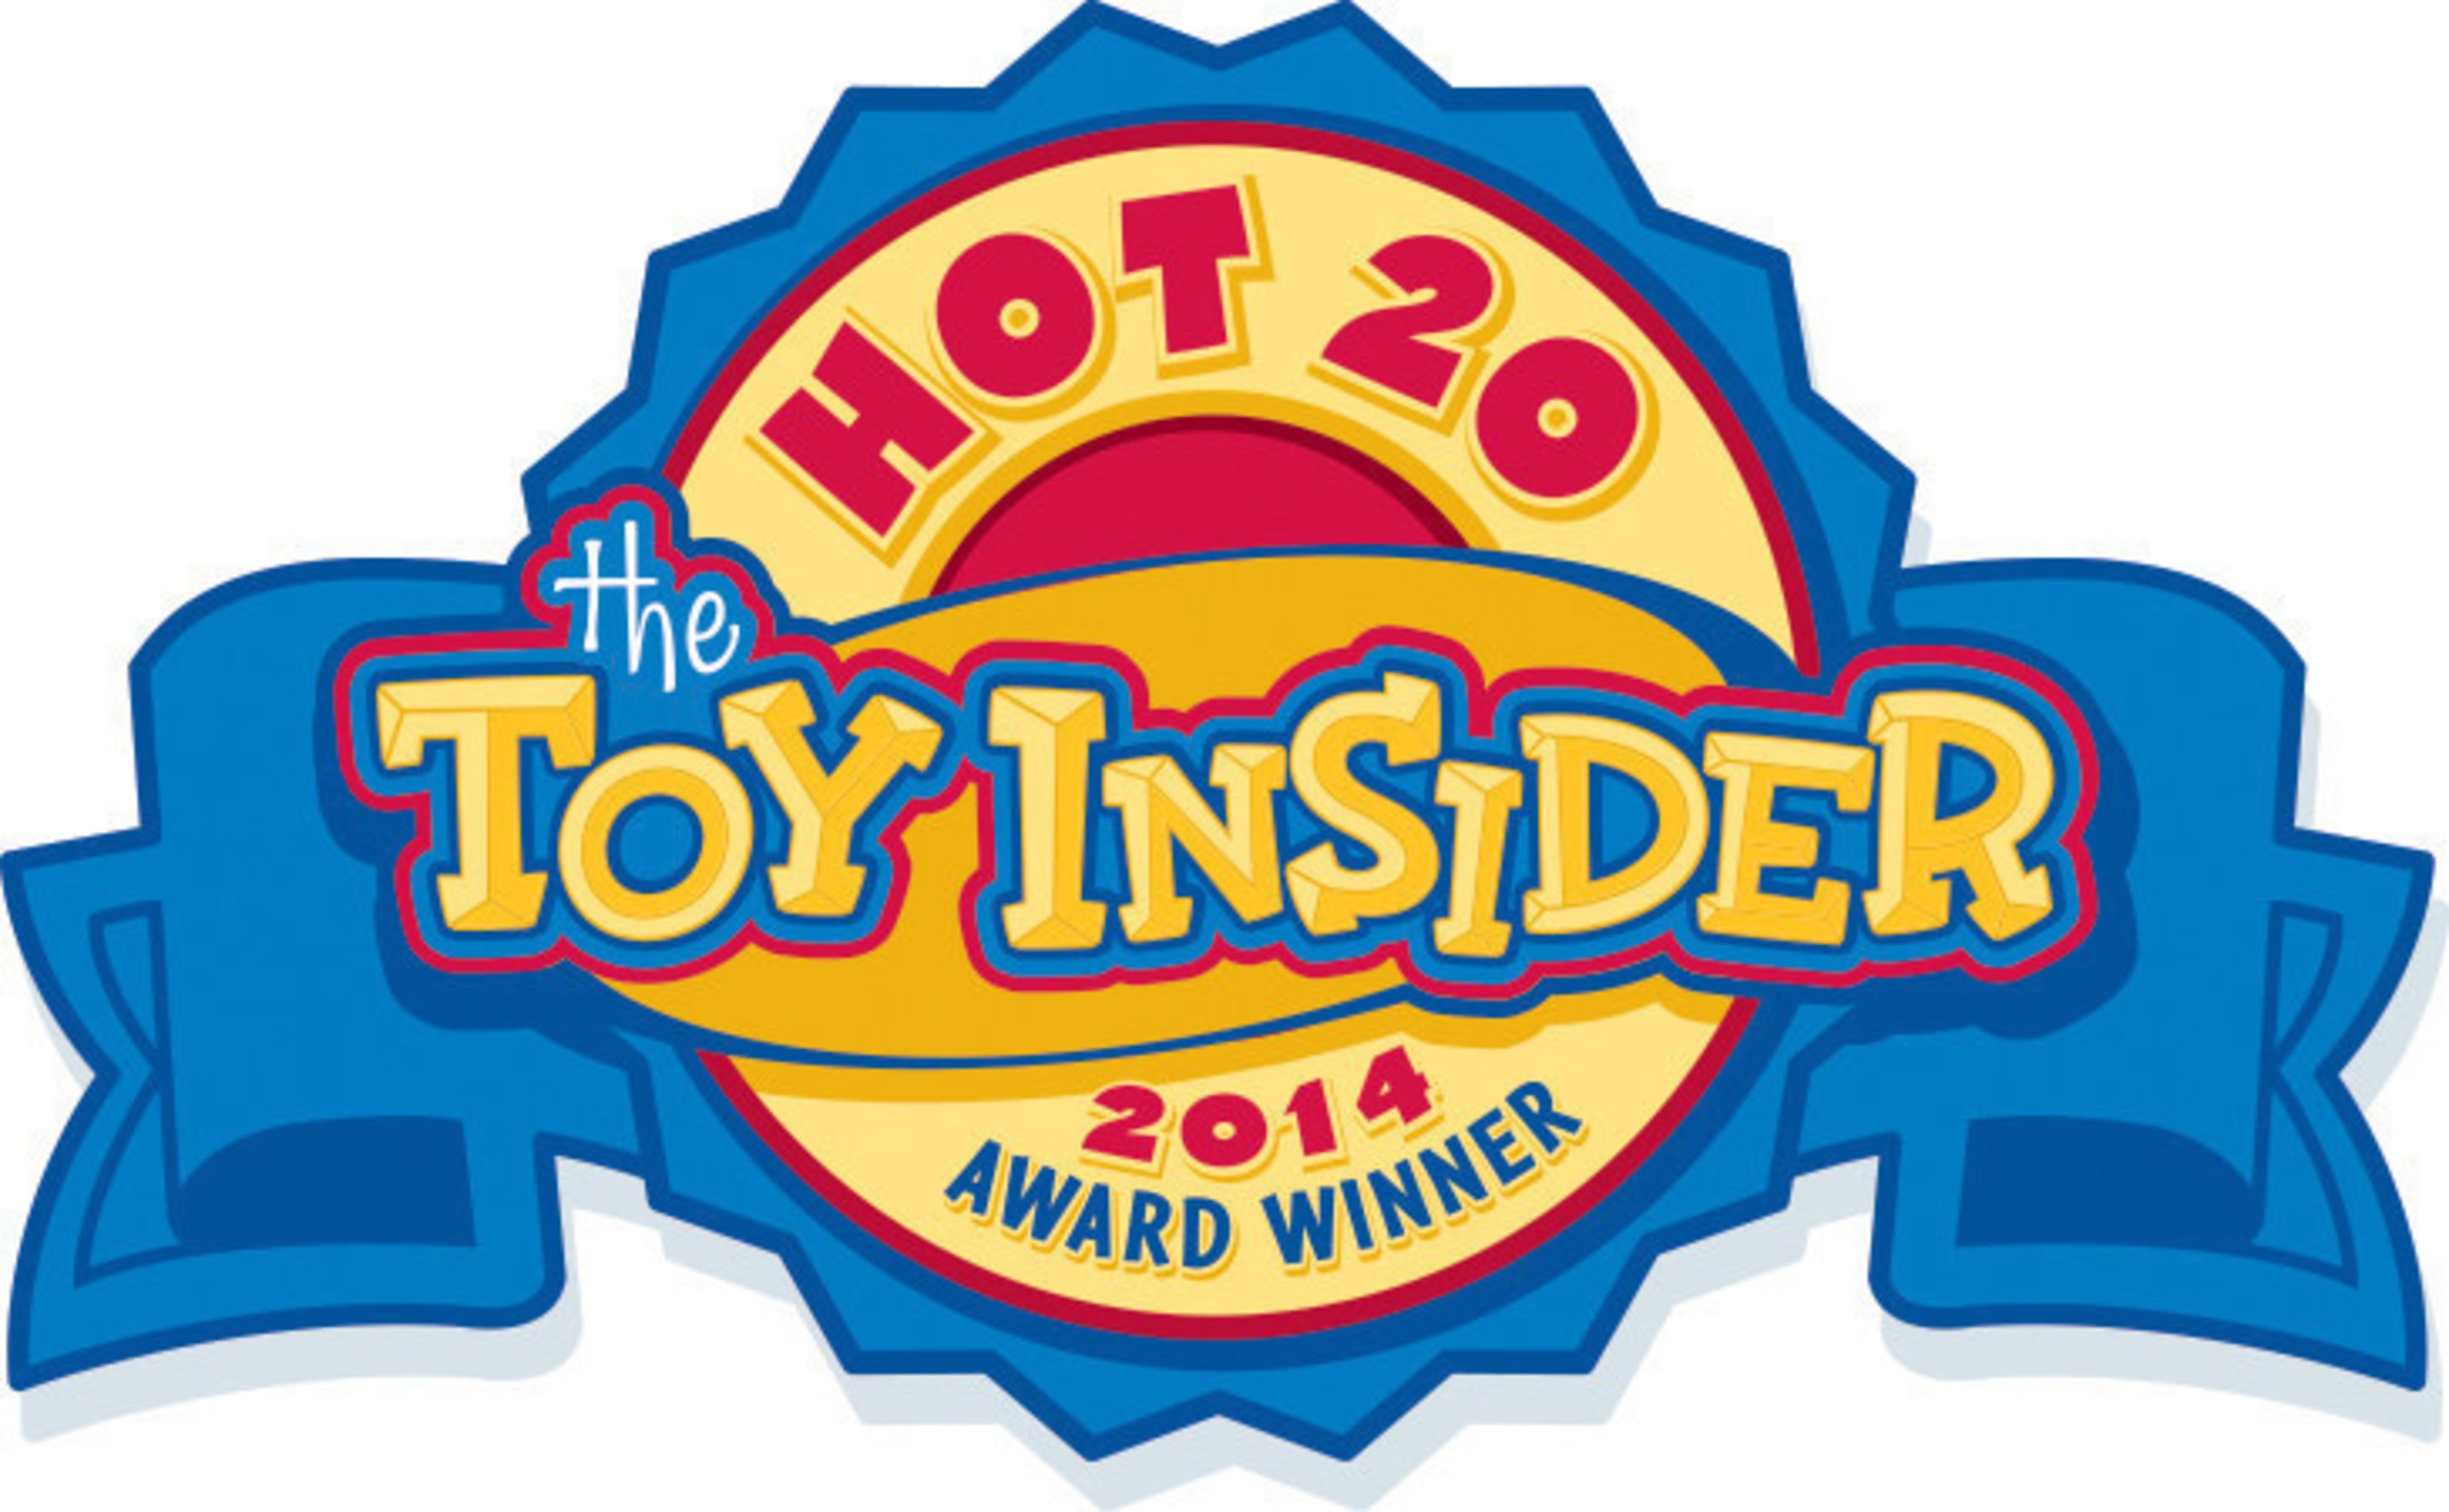 It's My Biz by Fashion Angels was named a Holiday 2014 Hot 20 Award winner by Toy Insider magazine. (PRNewsFoto/Fashion Angels Enterprises)